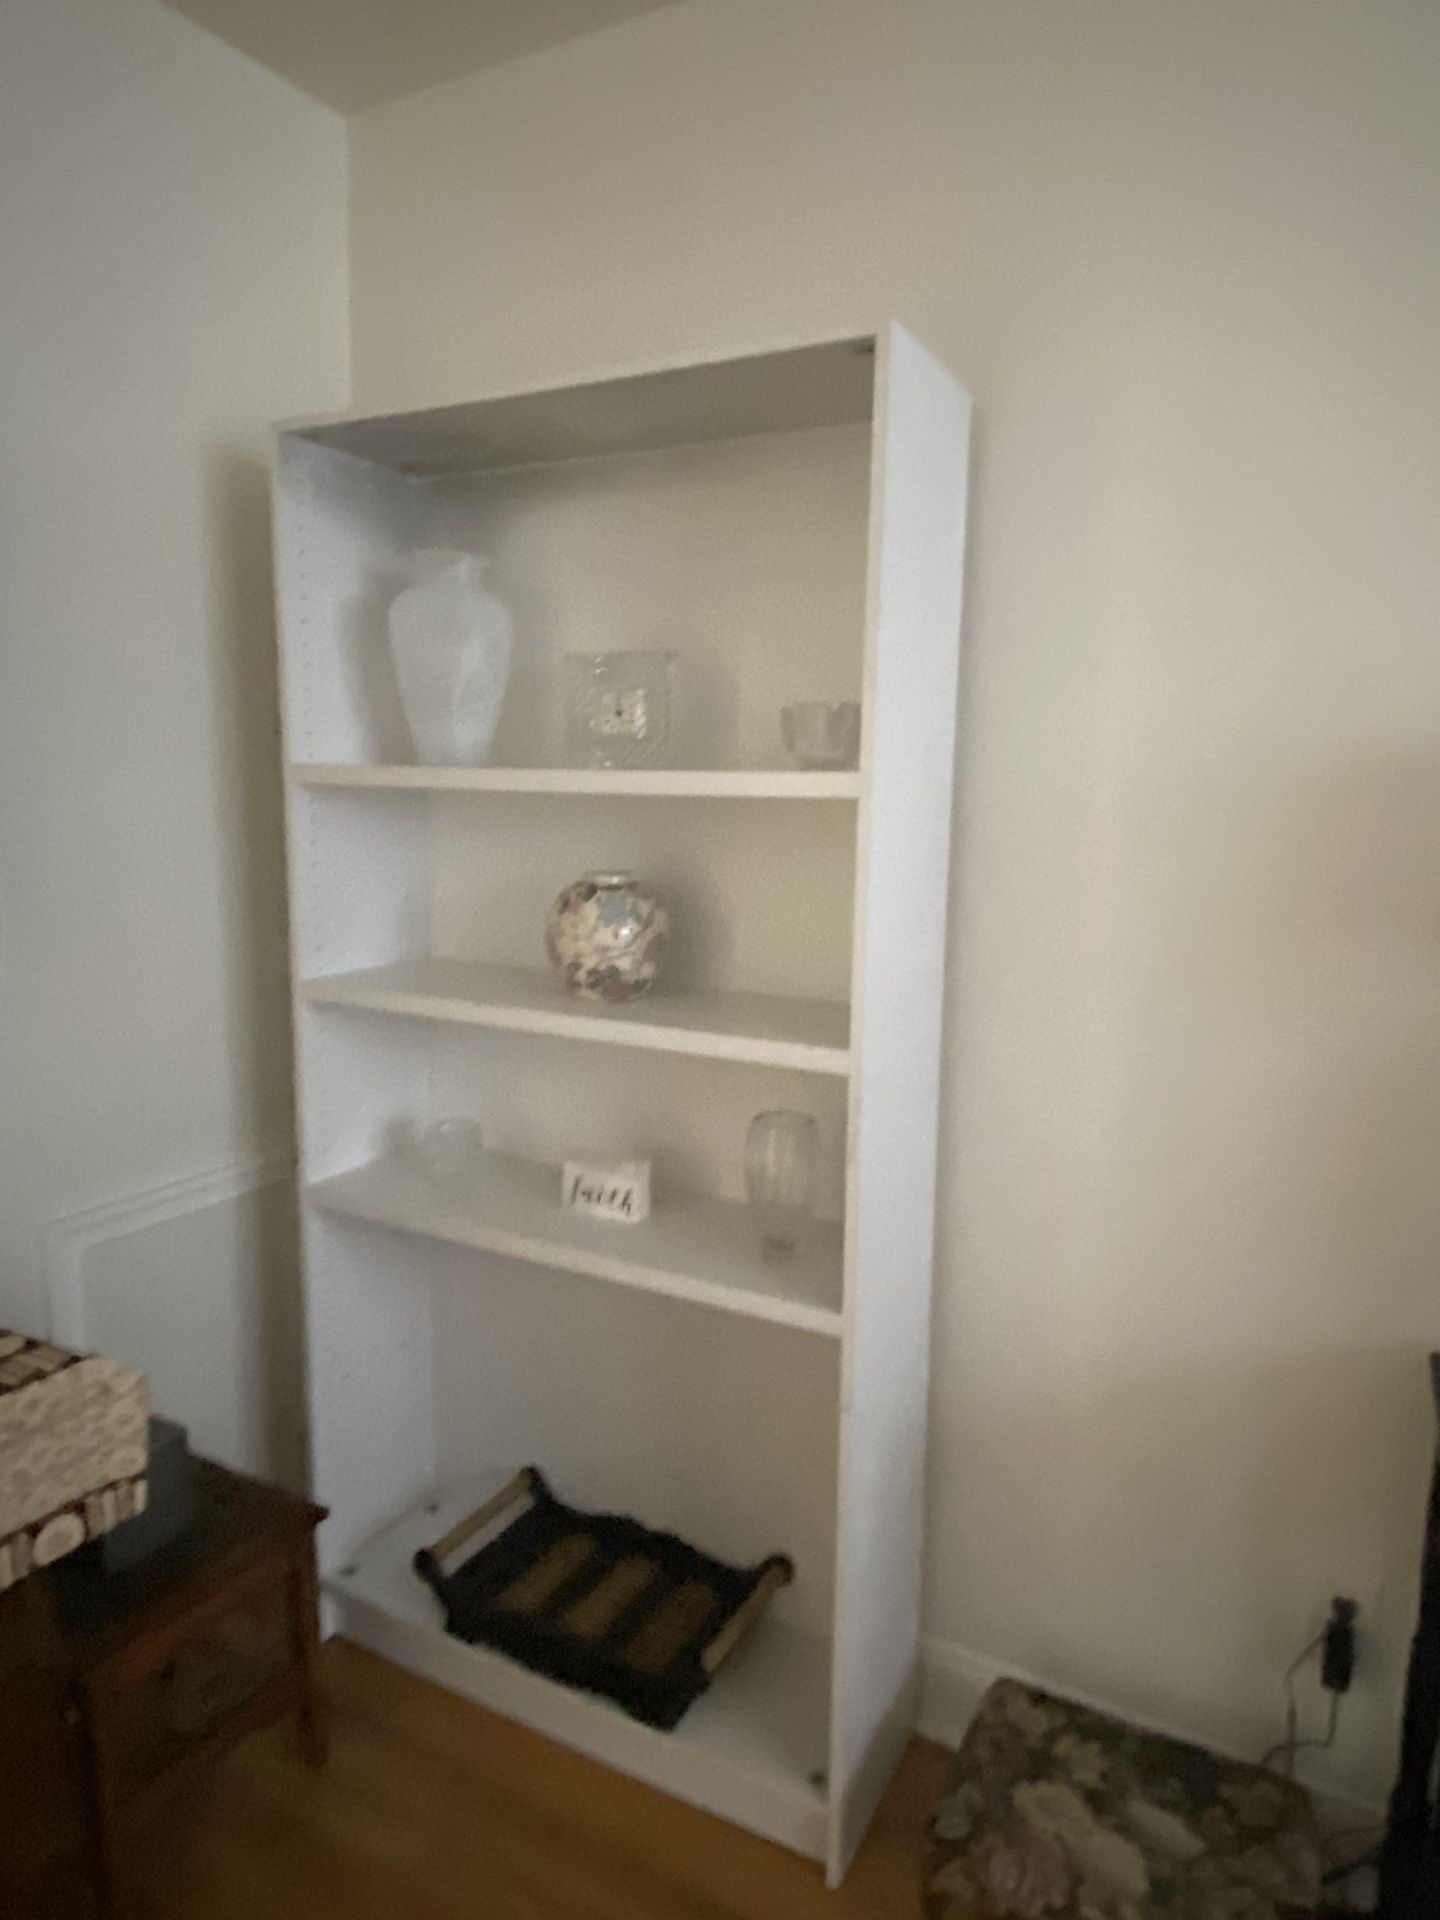 Tall White Bookcase - 4 Shelves - Best Offer - Pick Up 5/4